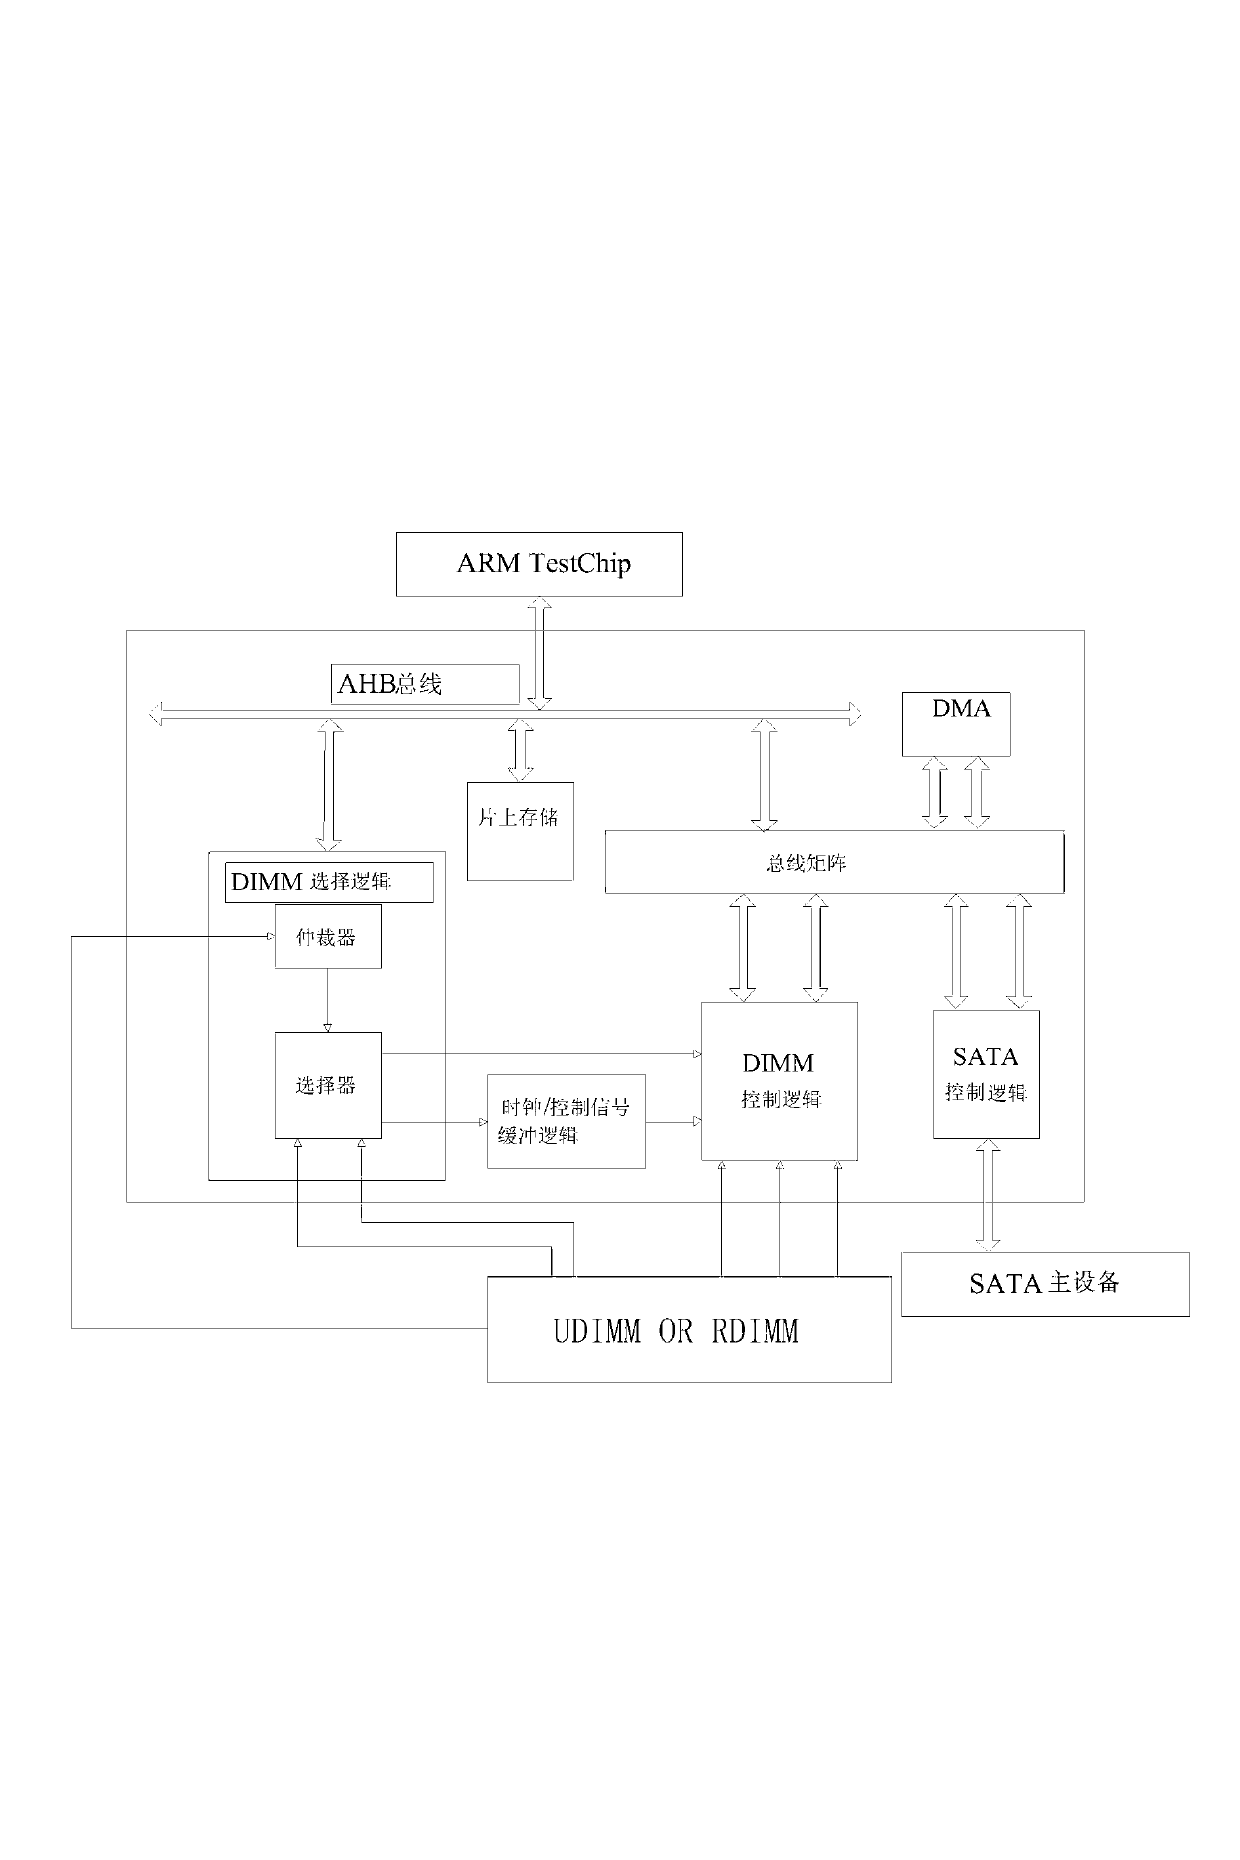 Method for testing dual inline memory modules (DIMM)